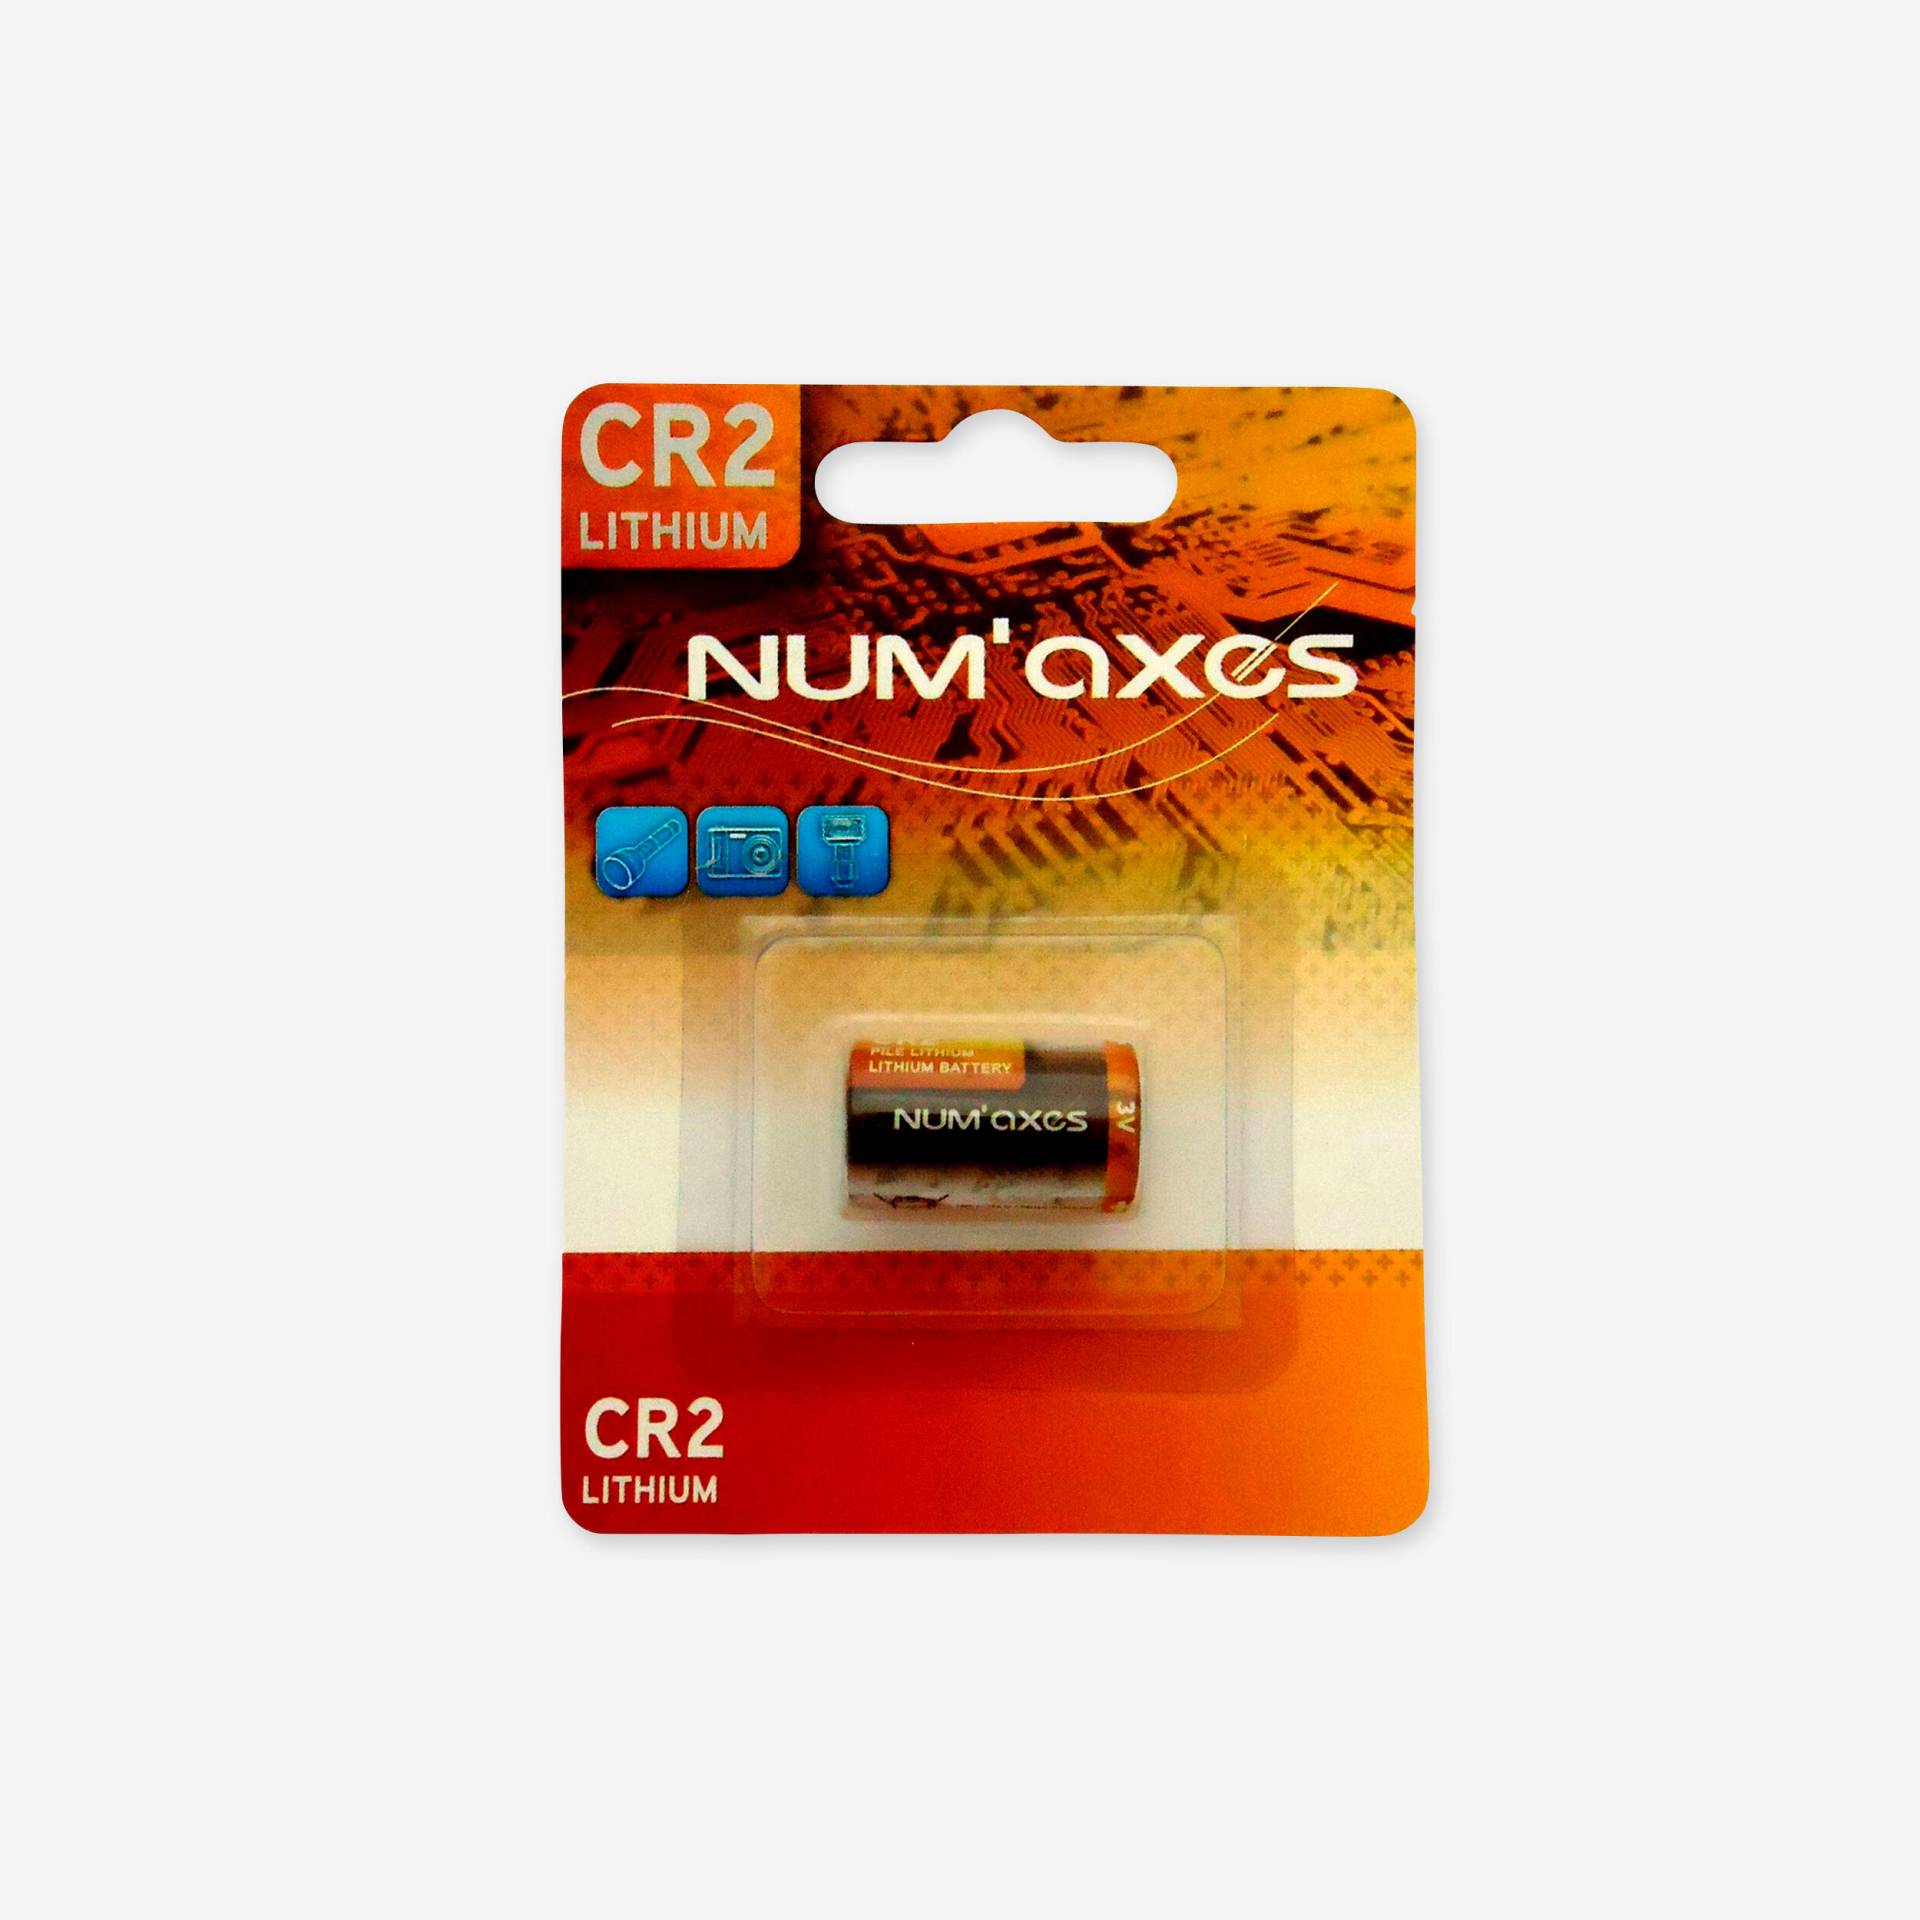 Lithiumbatterie Num'axes 3V CR2 von NUM'AXES